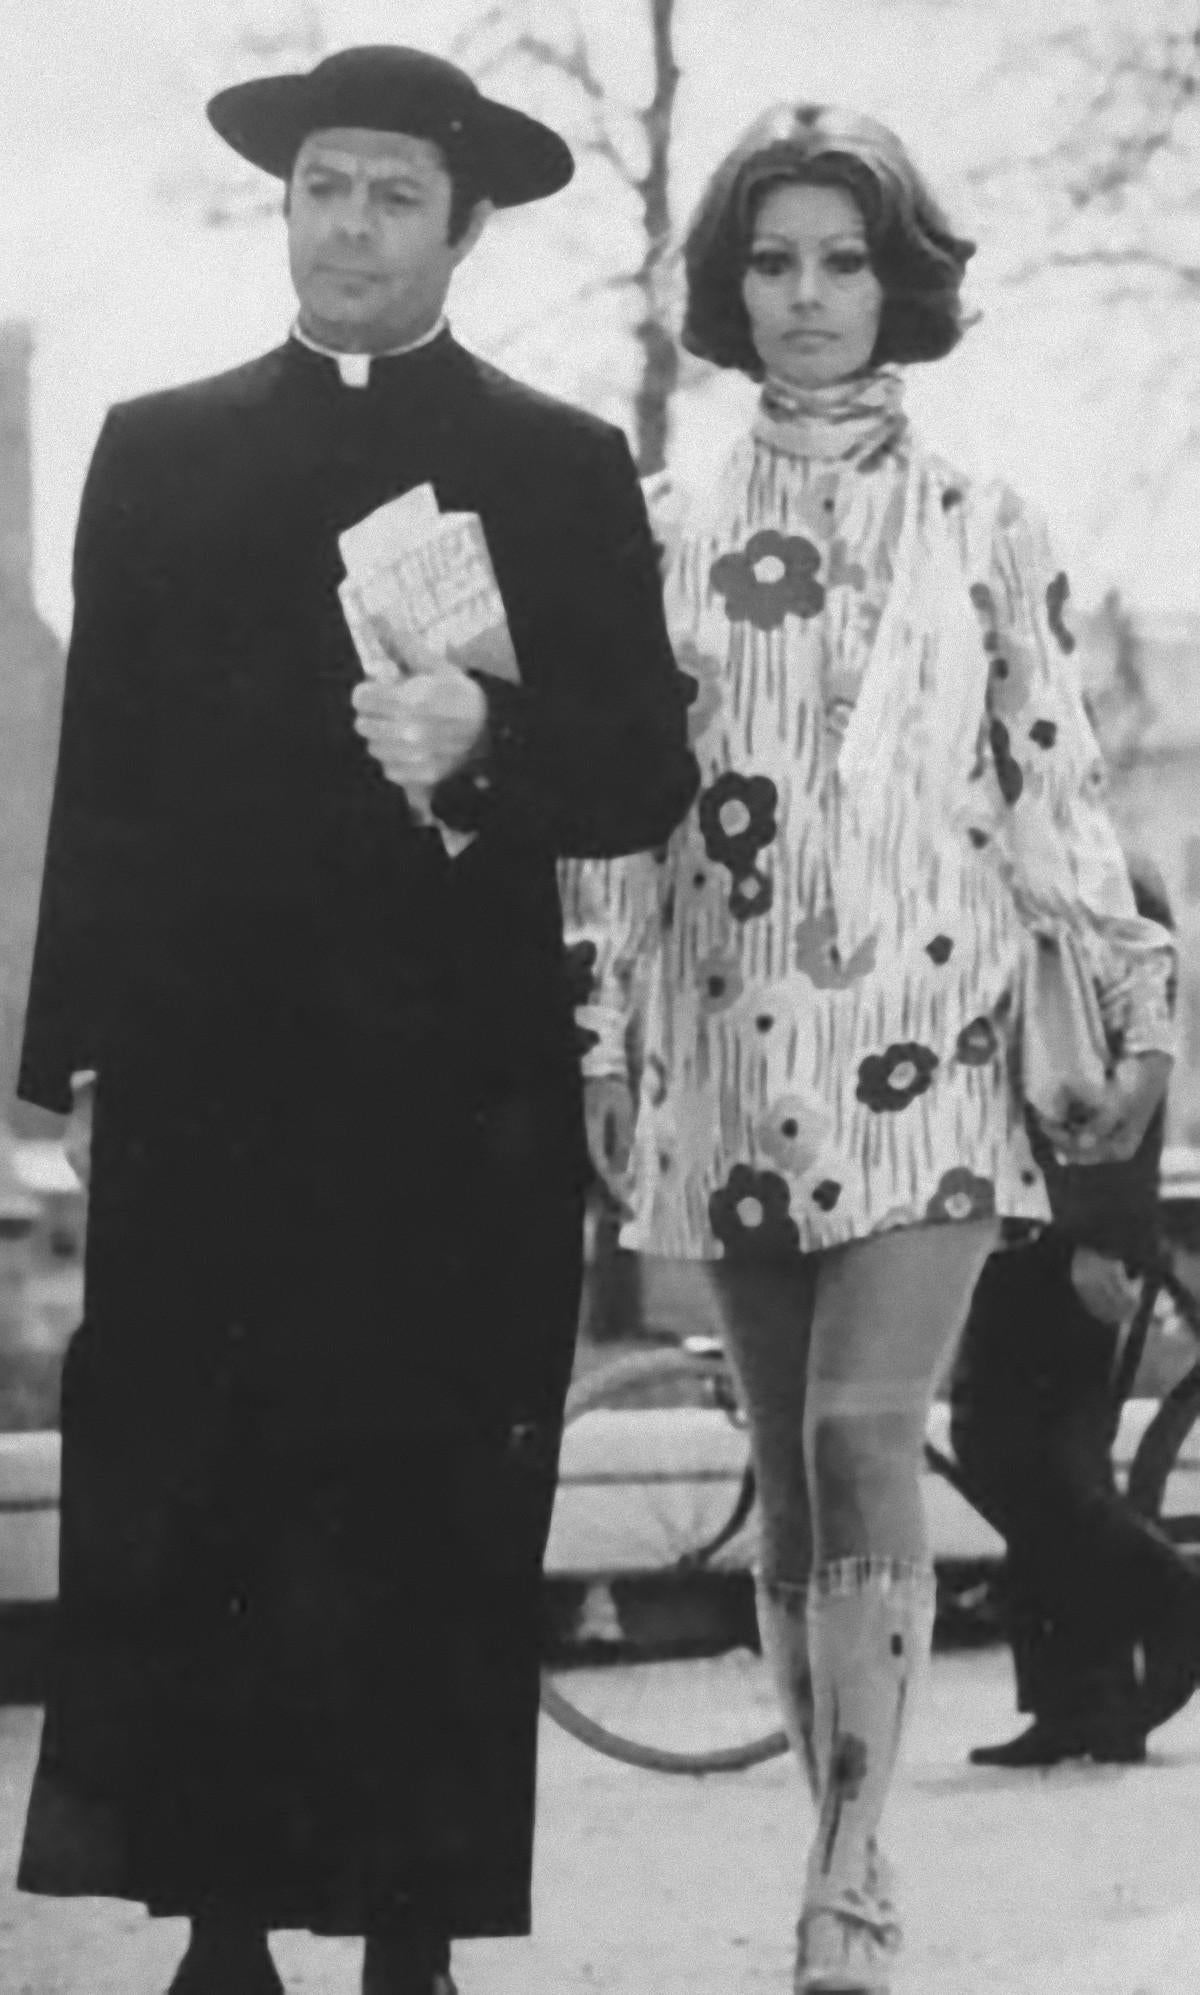 Unknown Portrait Photograph - Actors Marcello Mastroianni and Sophia Loren - Vintage b/w Photograph - 1971